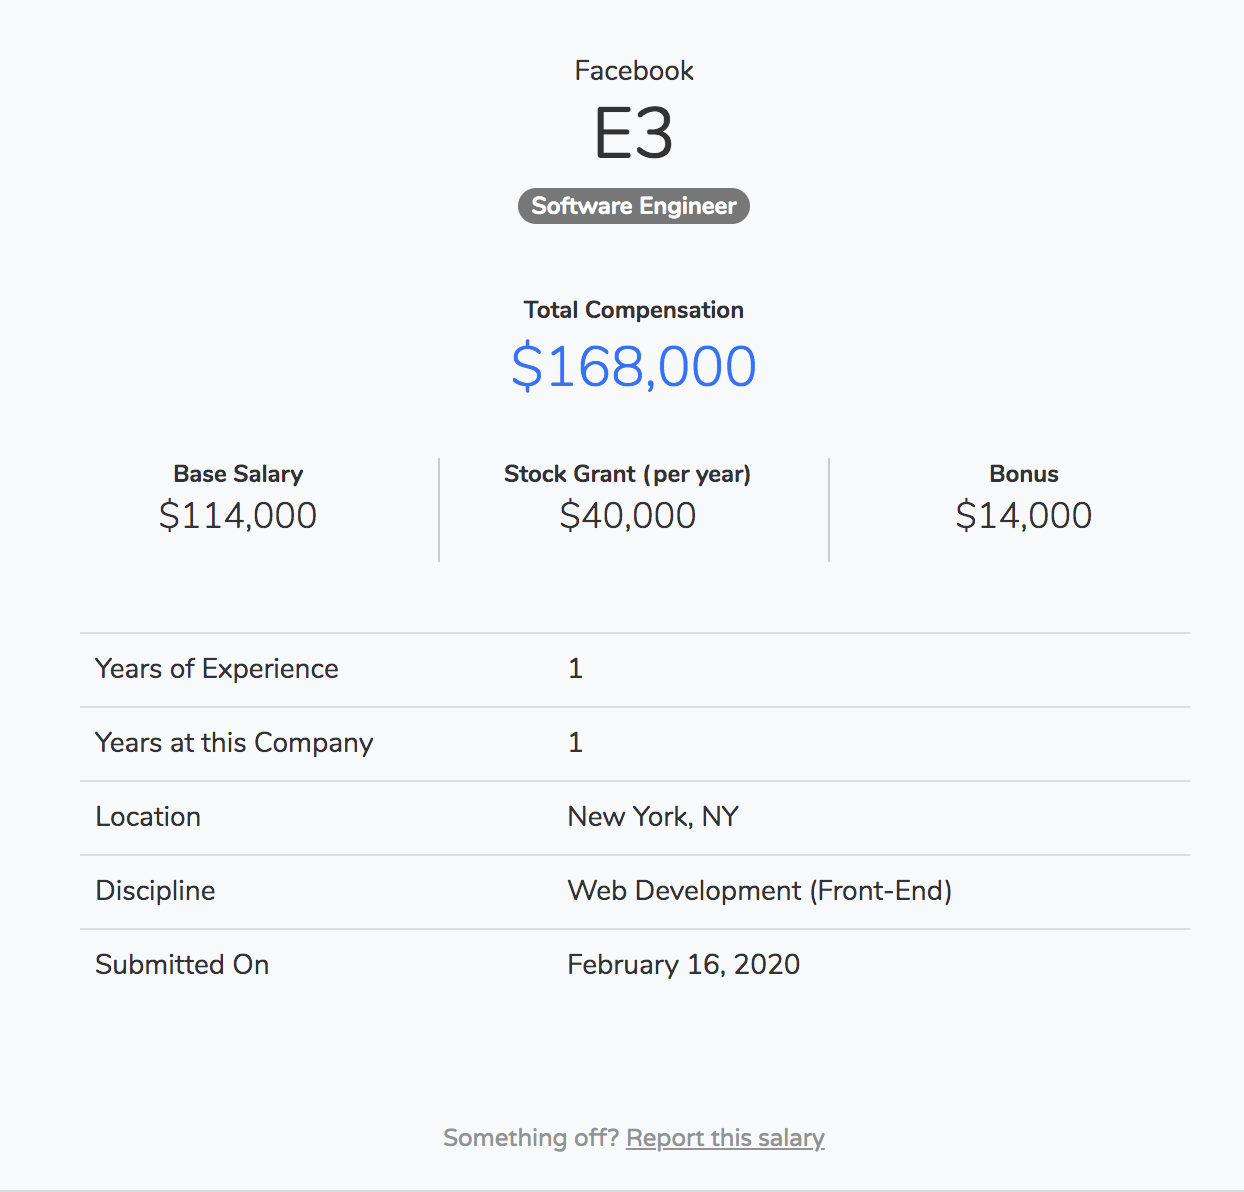 Facebook Front End Developer E3 Salary